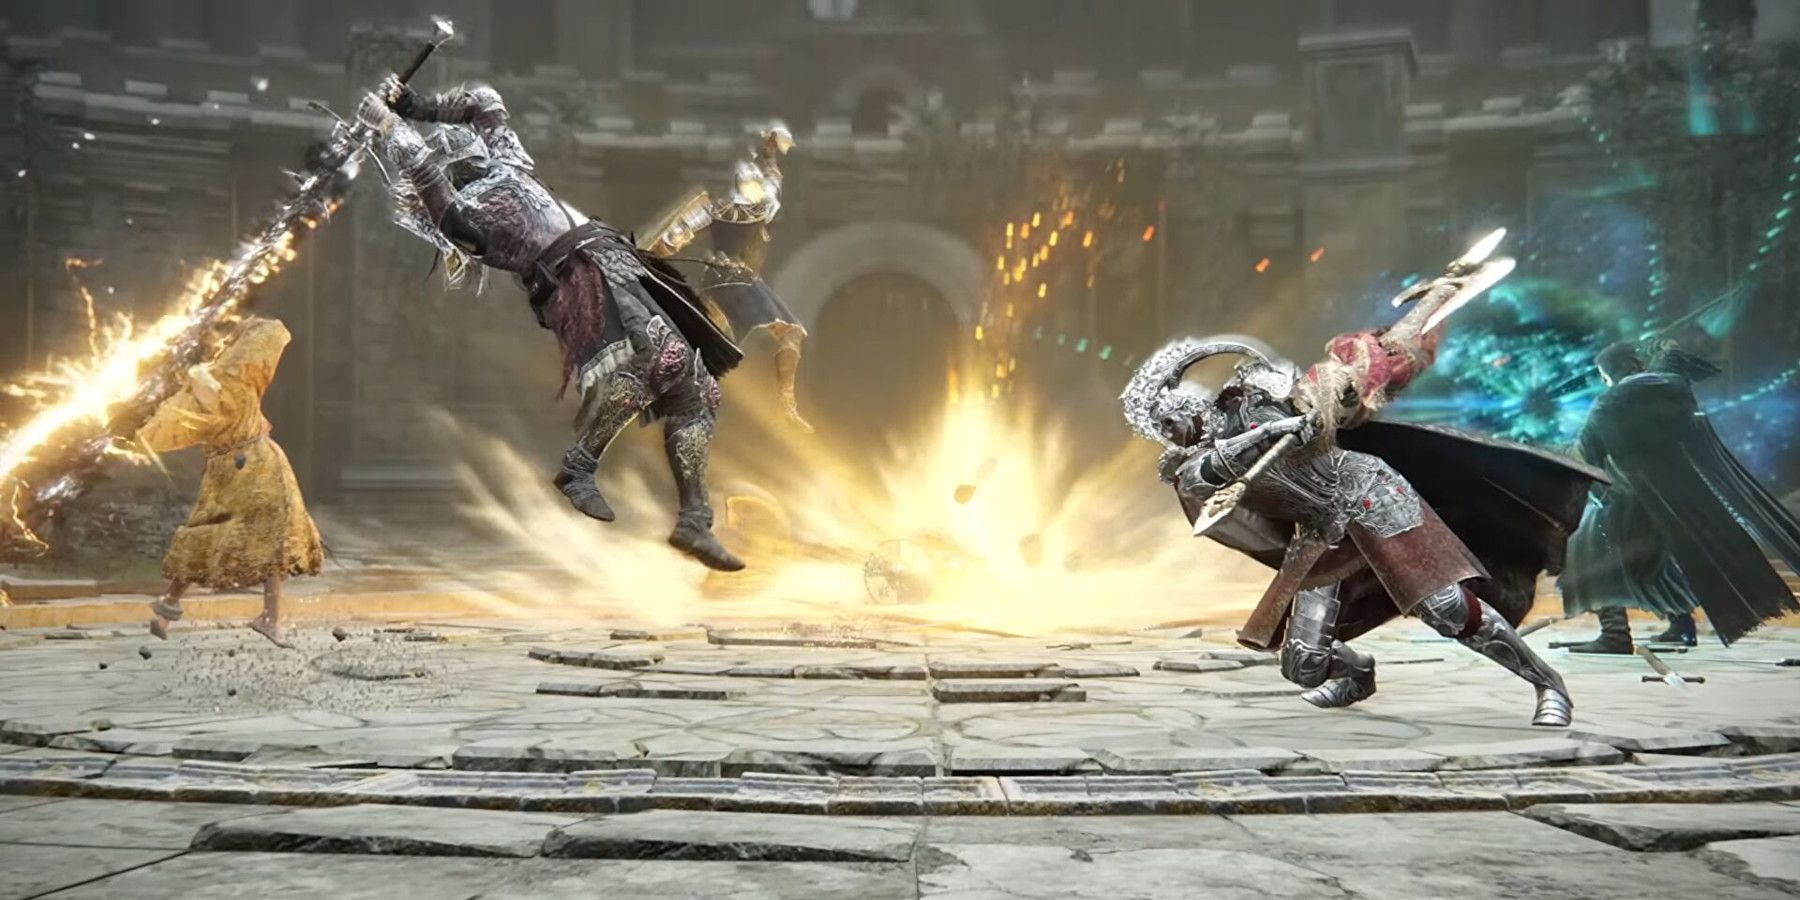 Elden Ring Opponents Die Identically in Bizarre Colosseum Fight